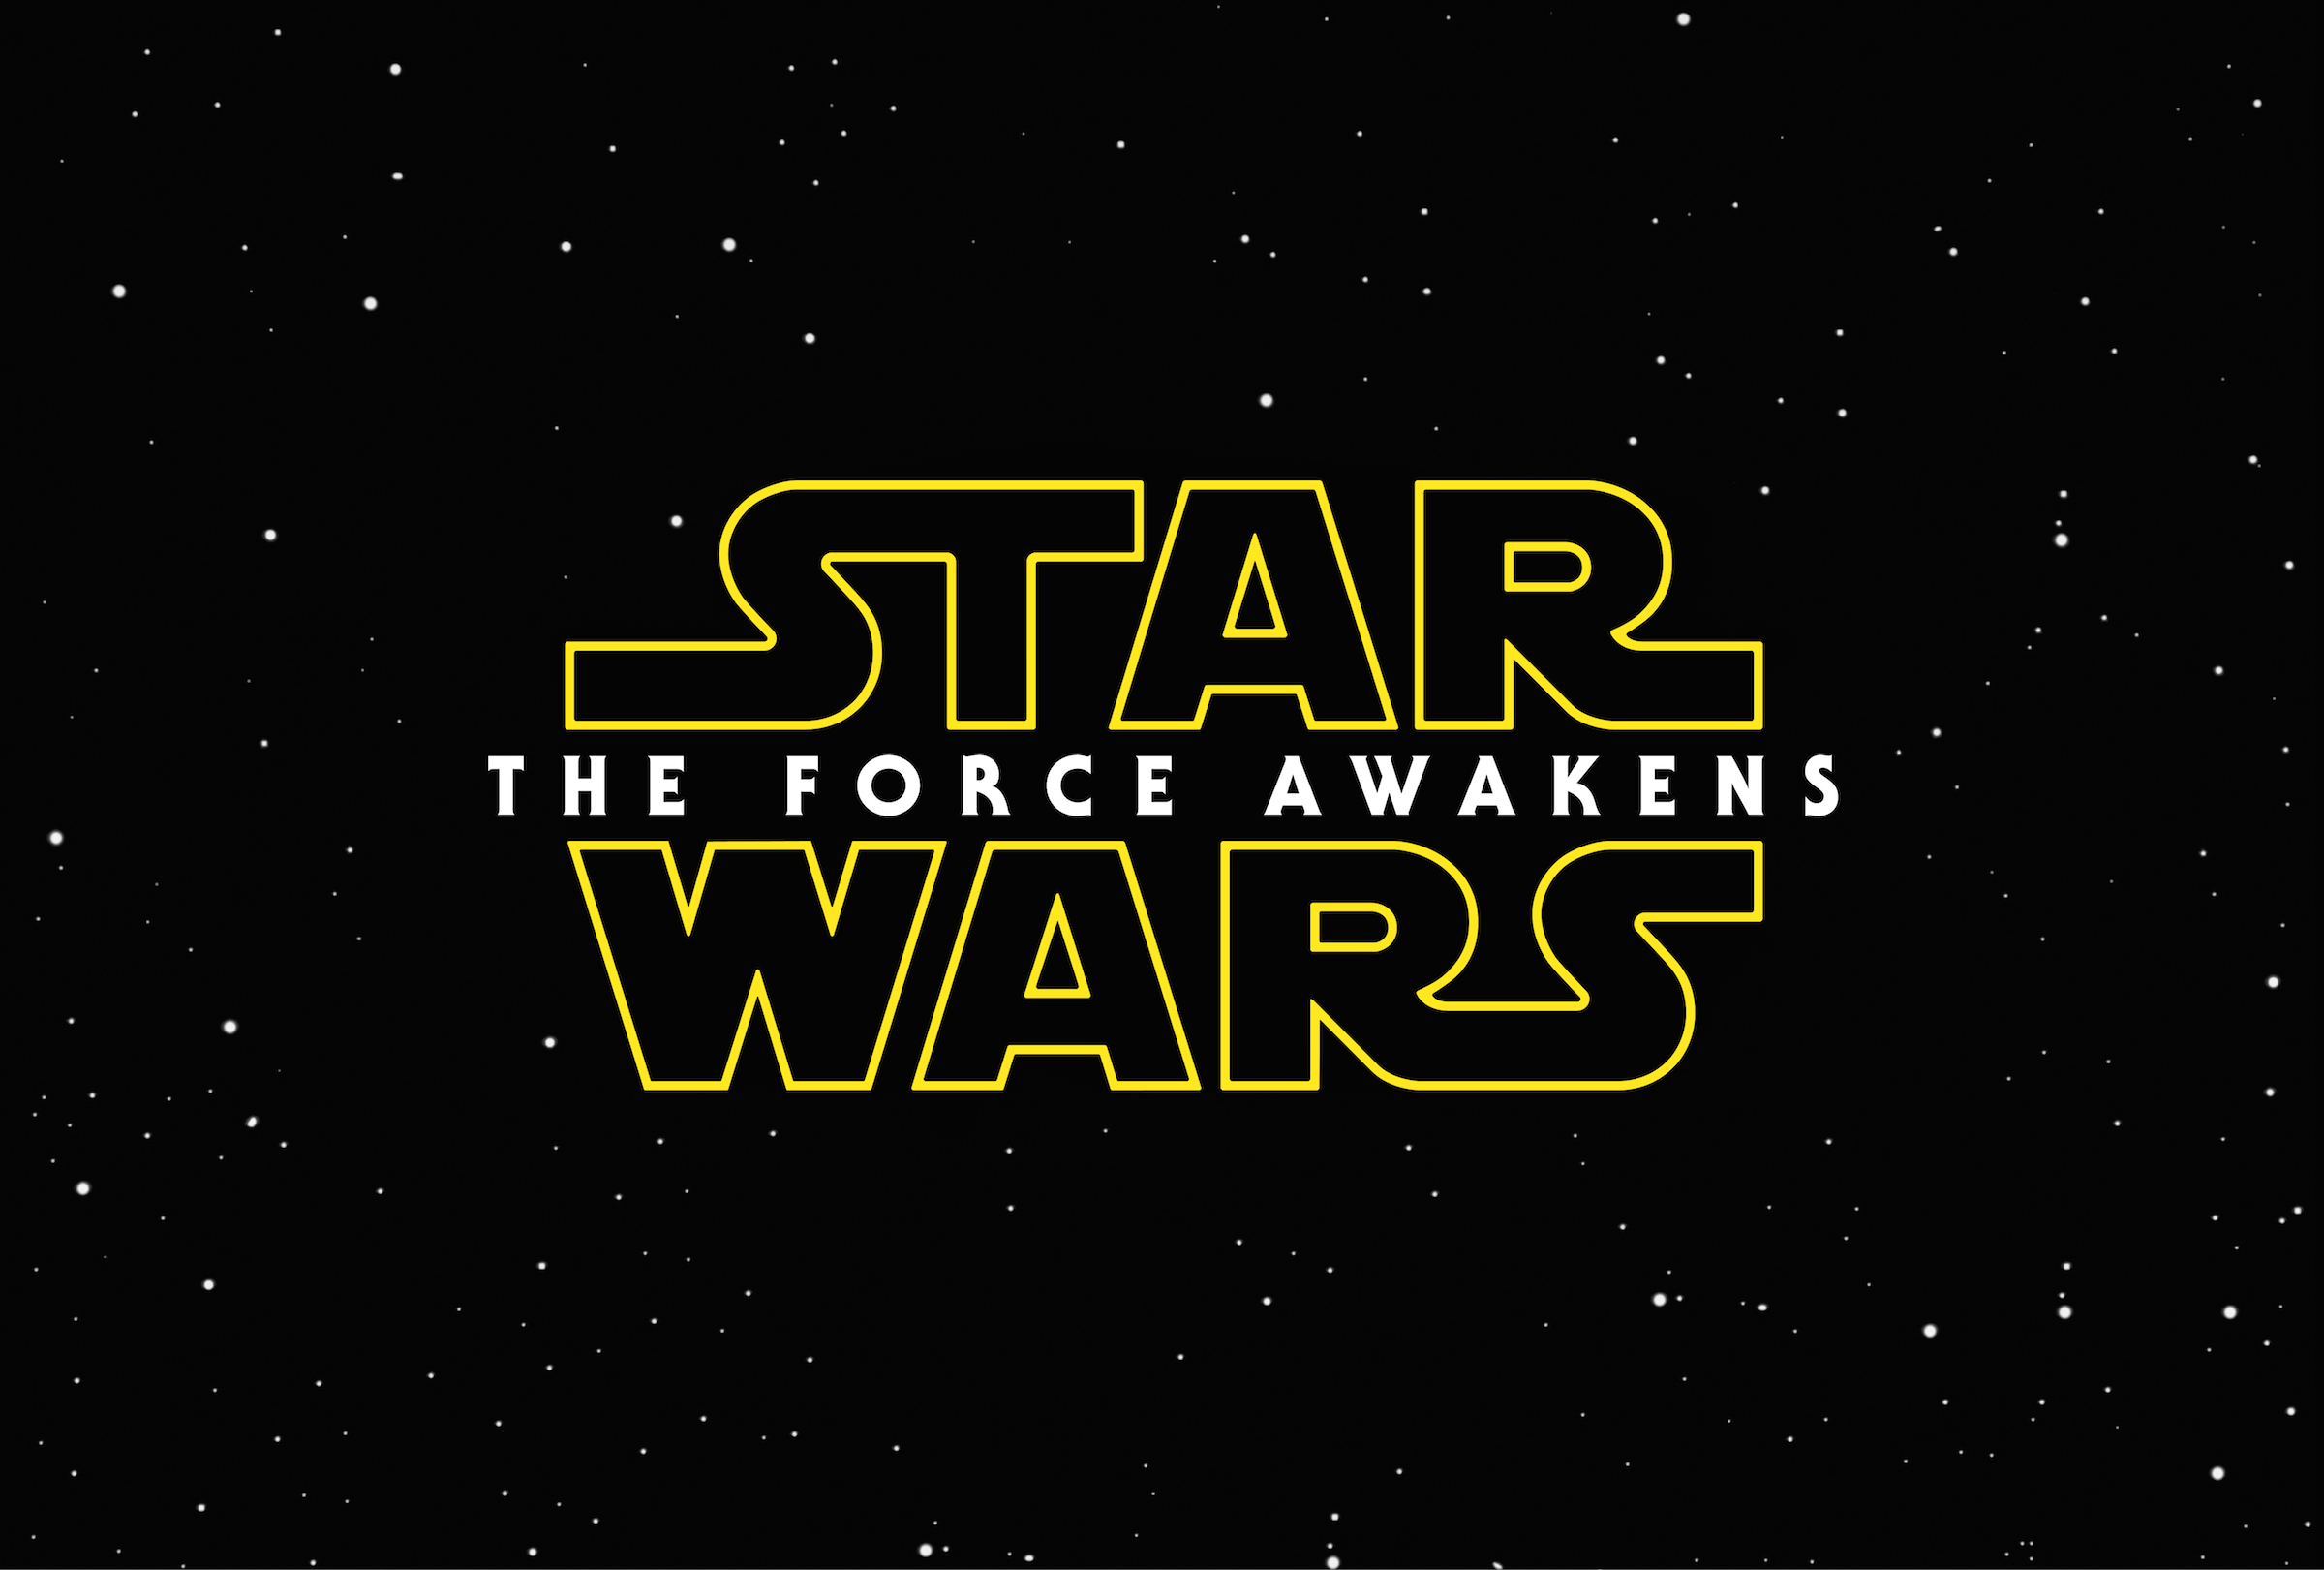 New "Star Wars" Trailer